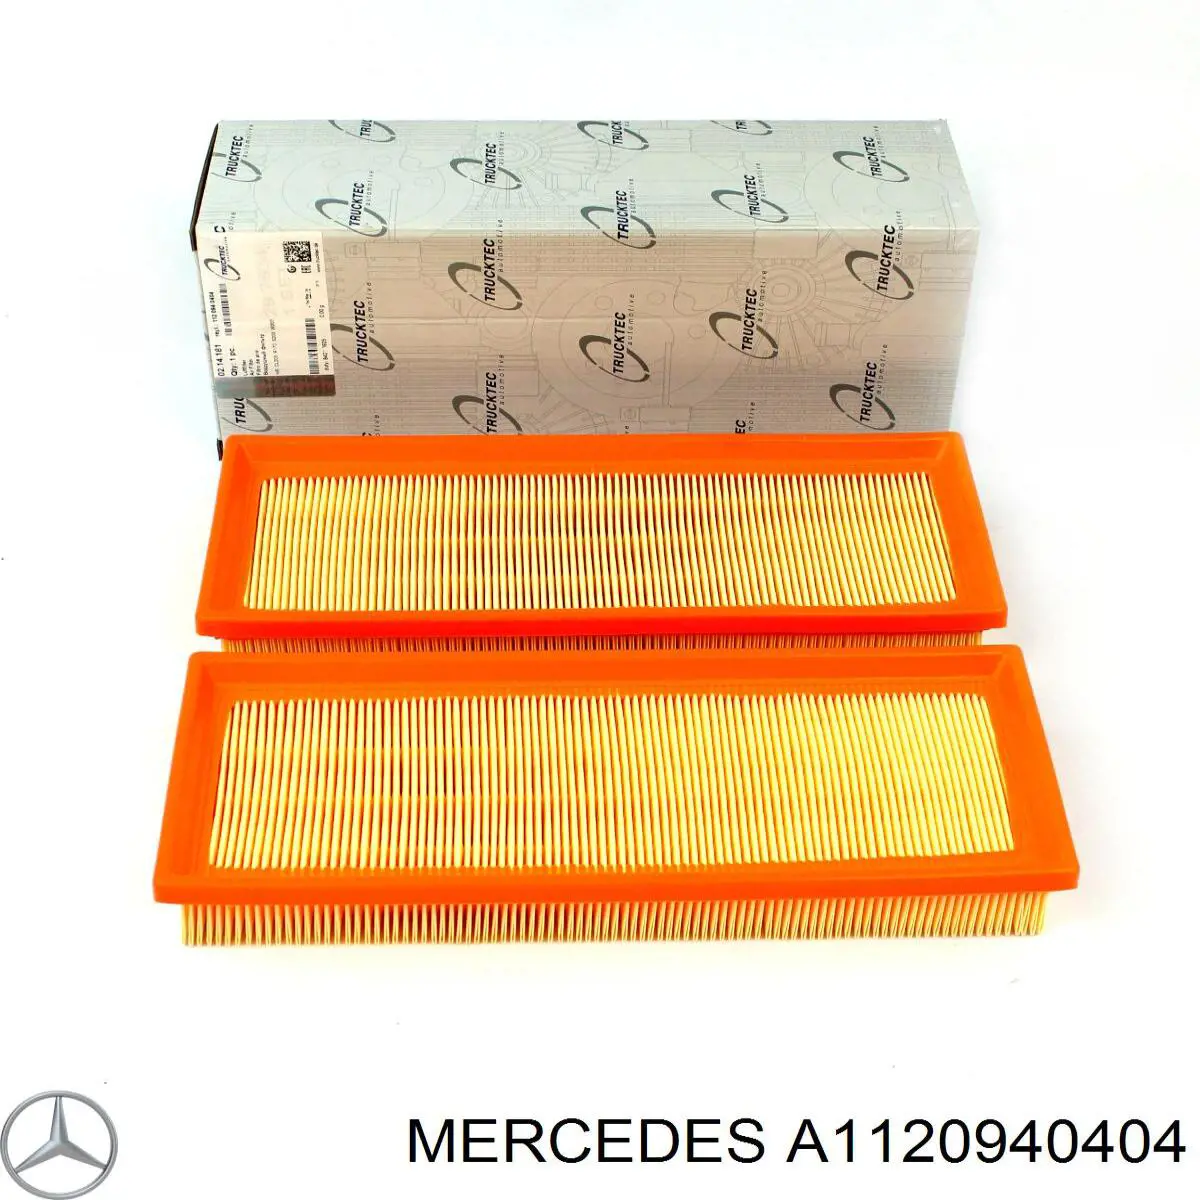 A1120940404 Mercedes filtro de aire